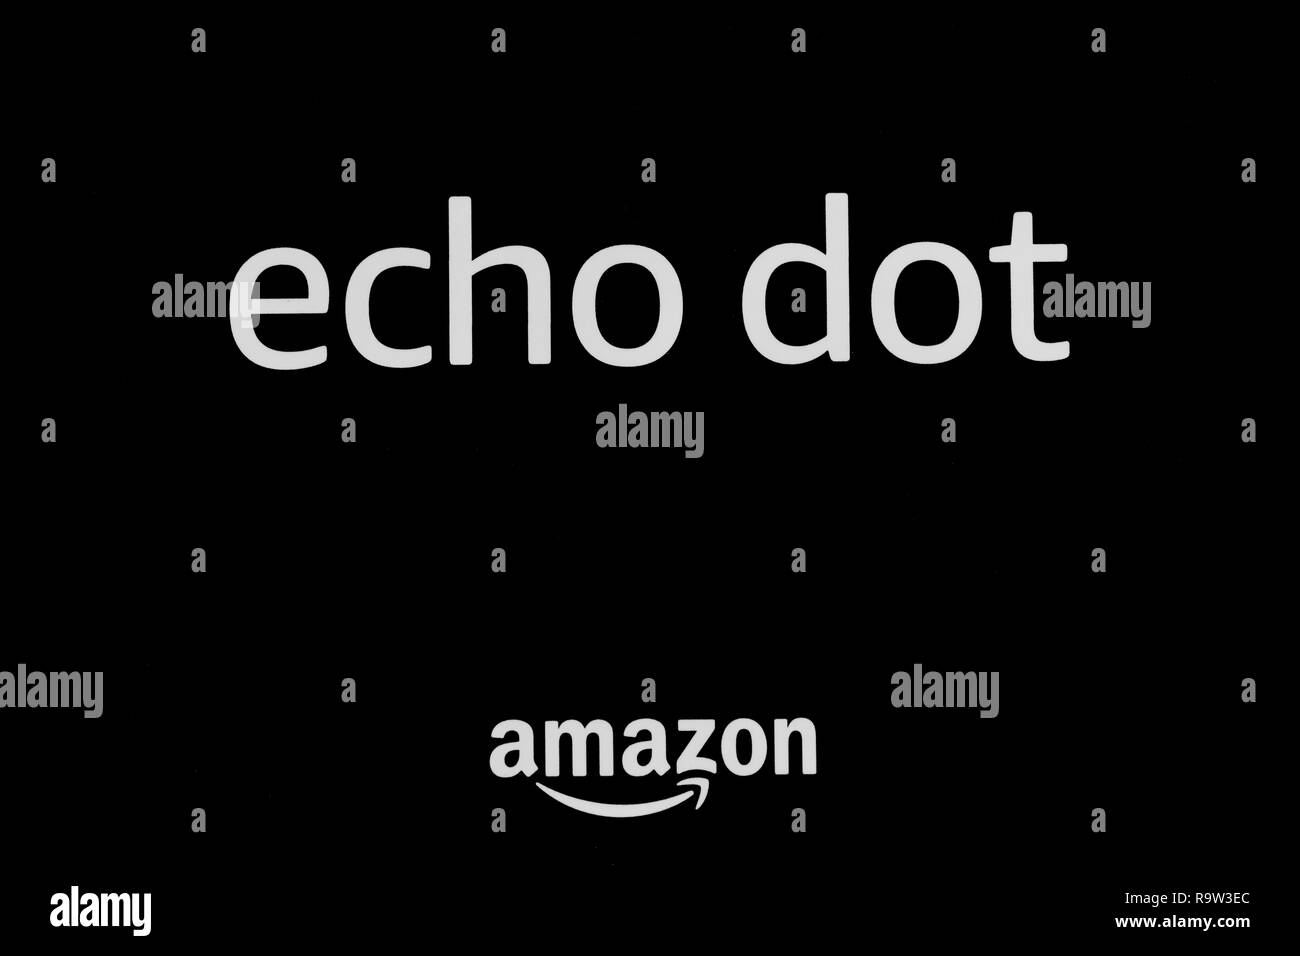 3rd generation Echo Dot smart speaker with Alexa from Amazon Stock Photo